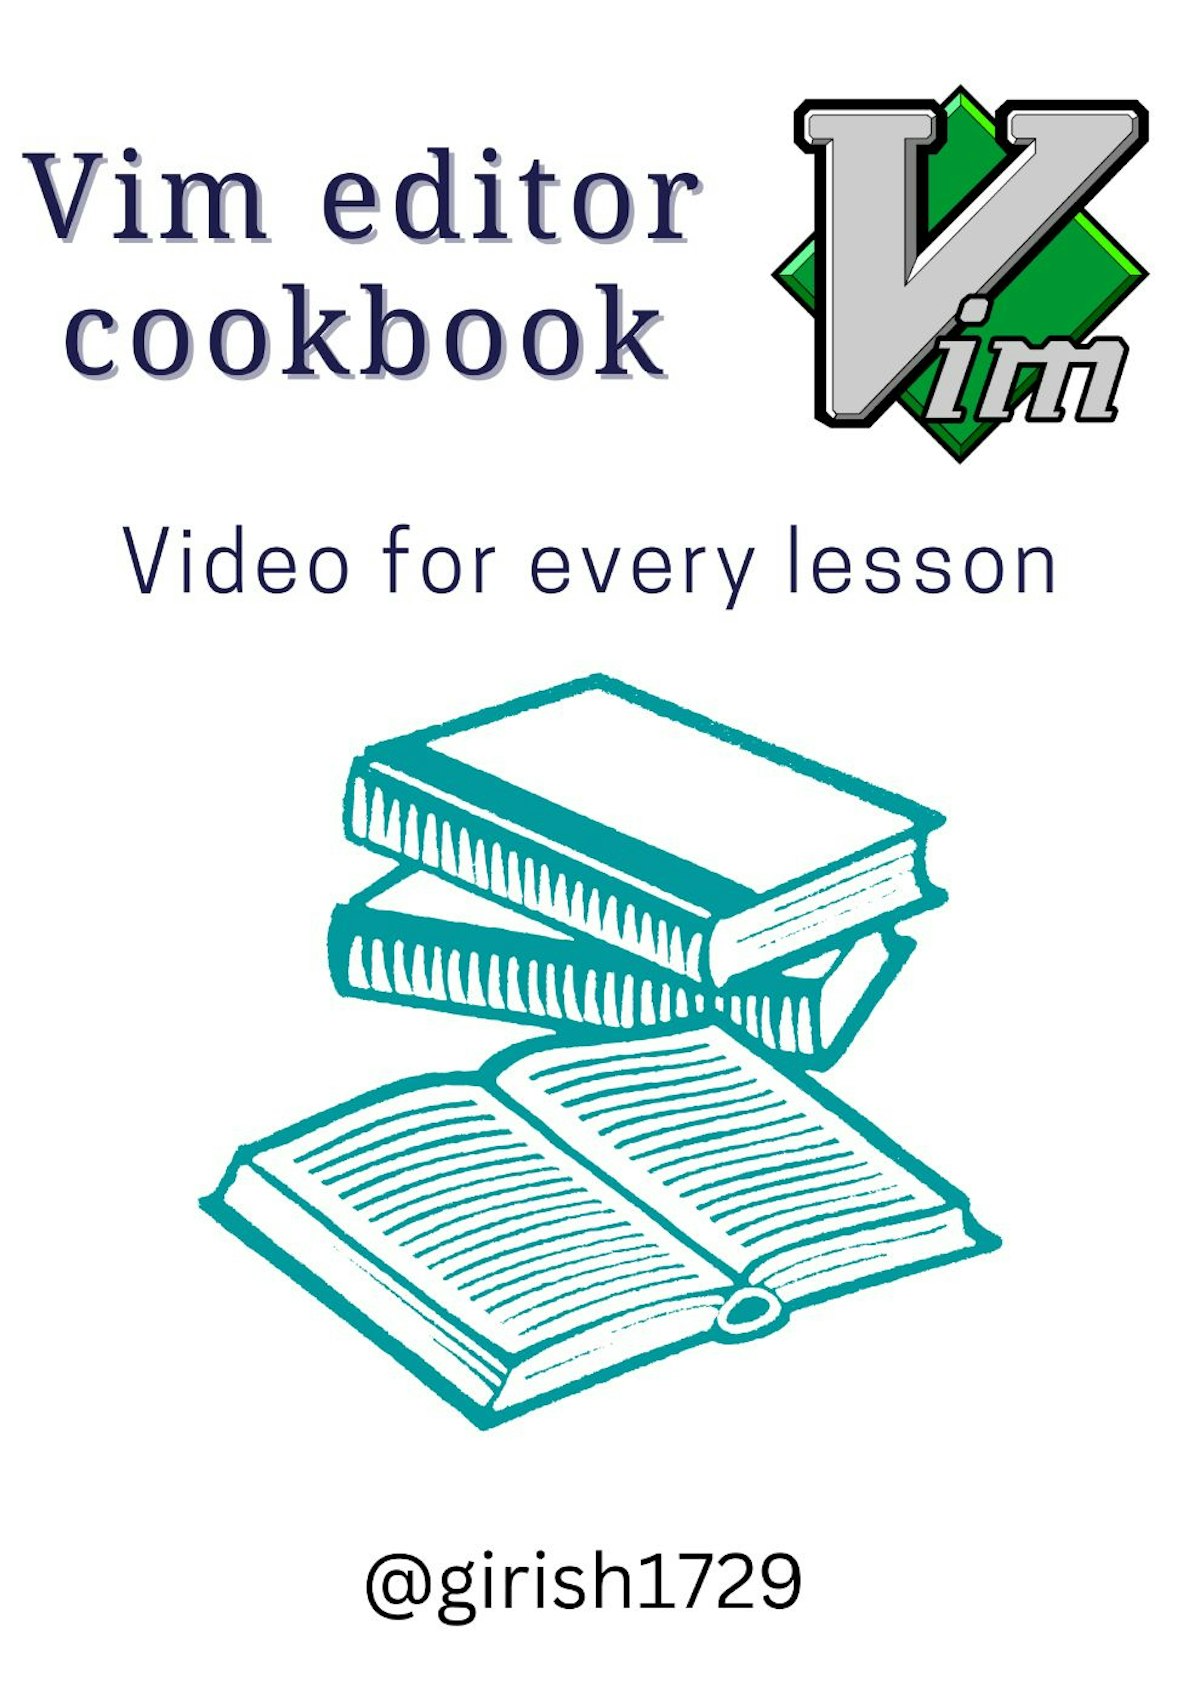 featured image - The Vim Editor Cookbook